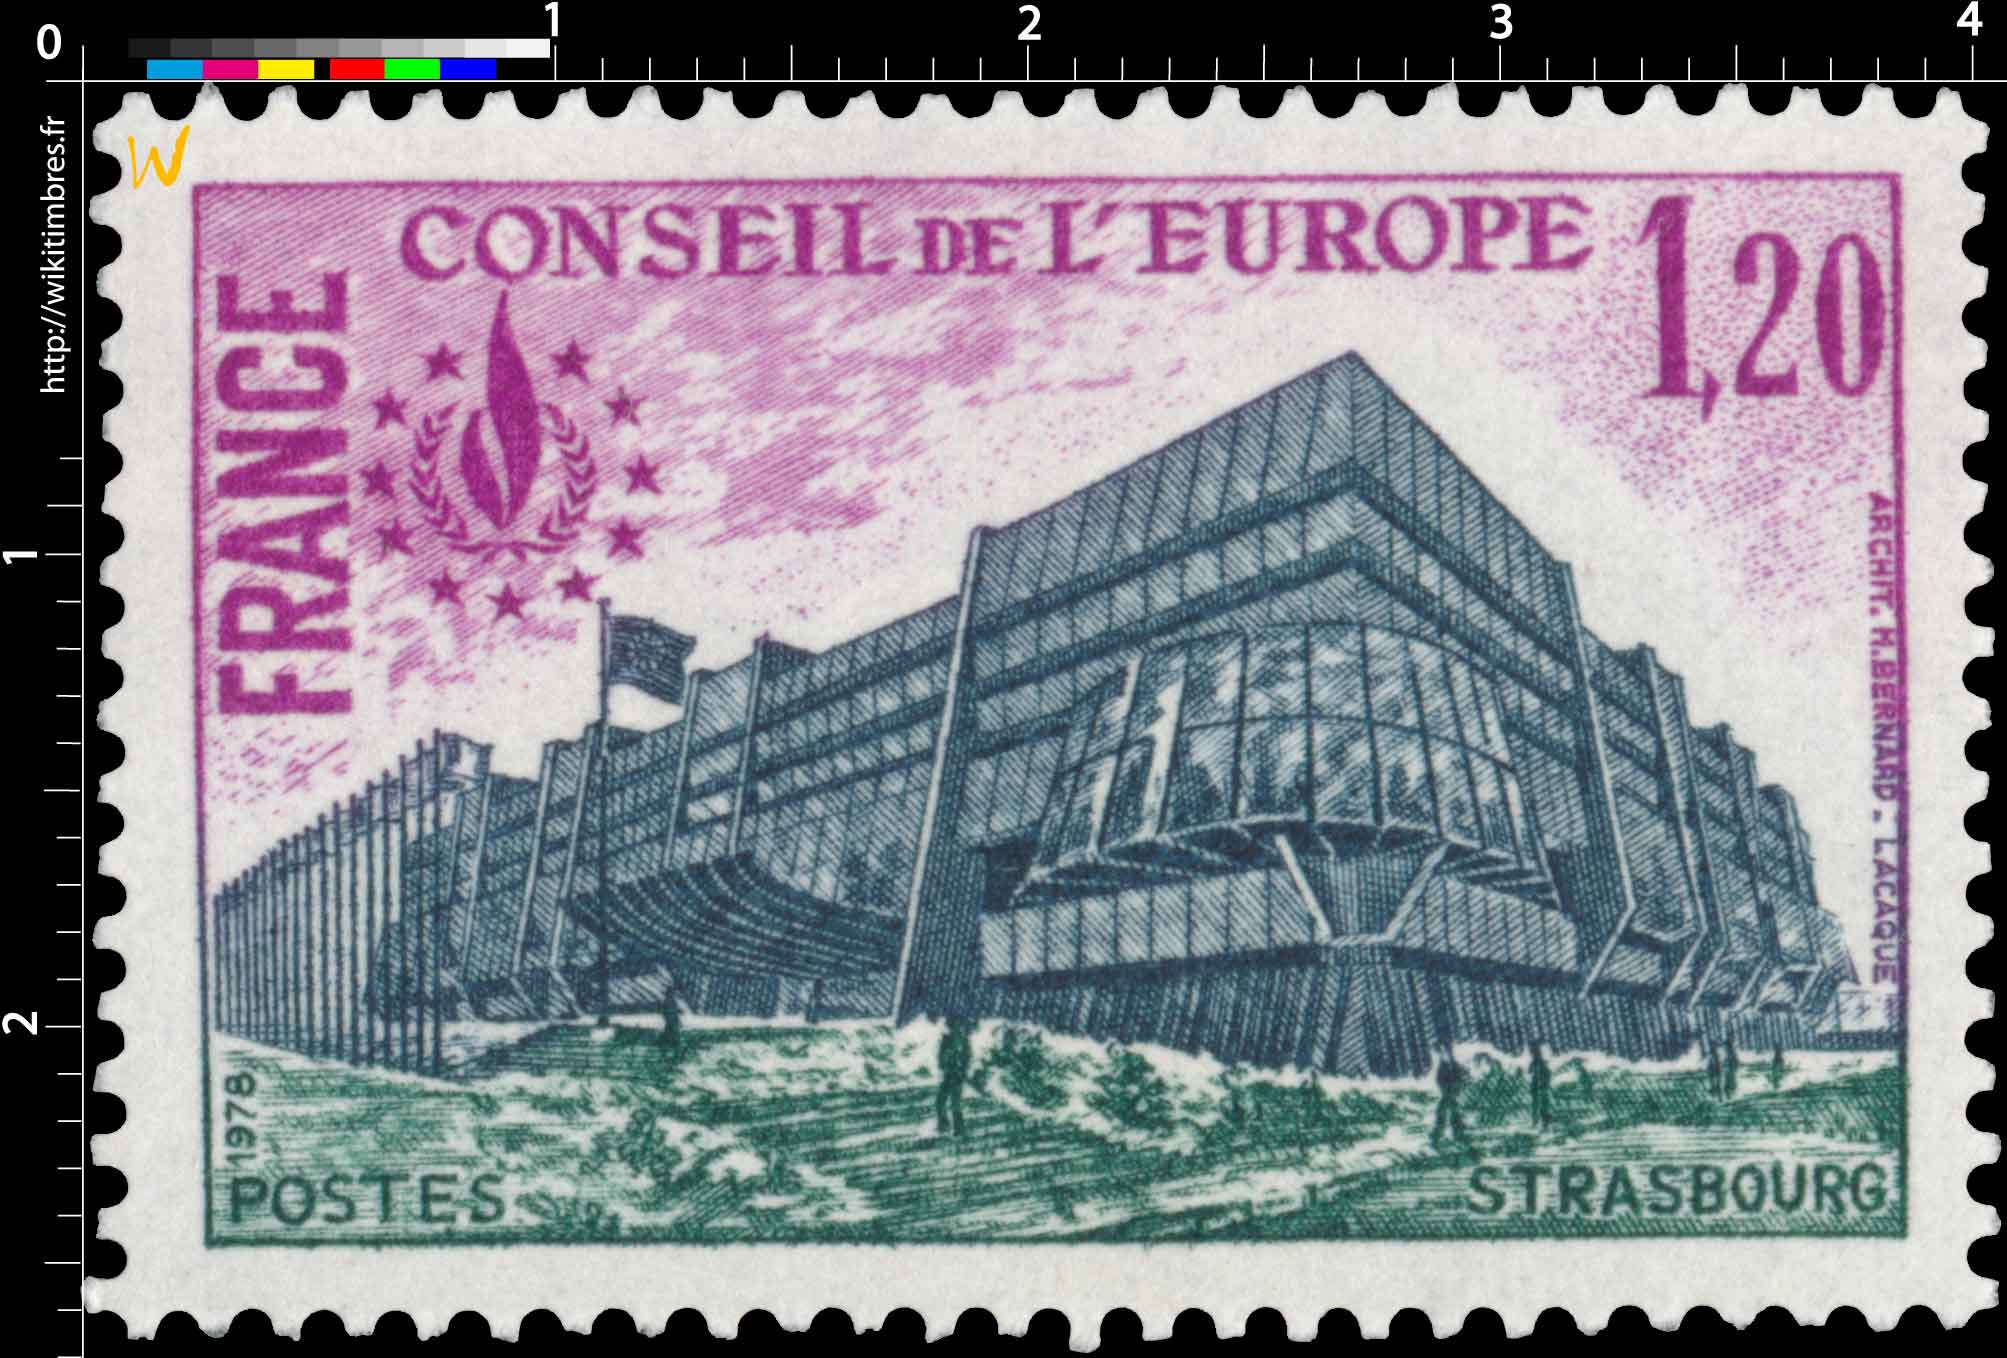 1978 CONSEIL DE L'EUROPE STRASBOURG